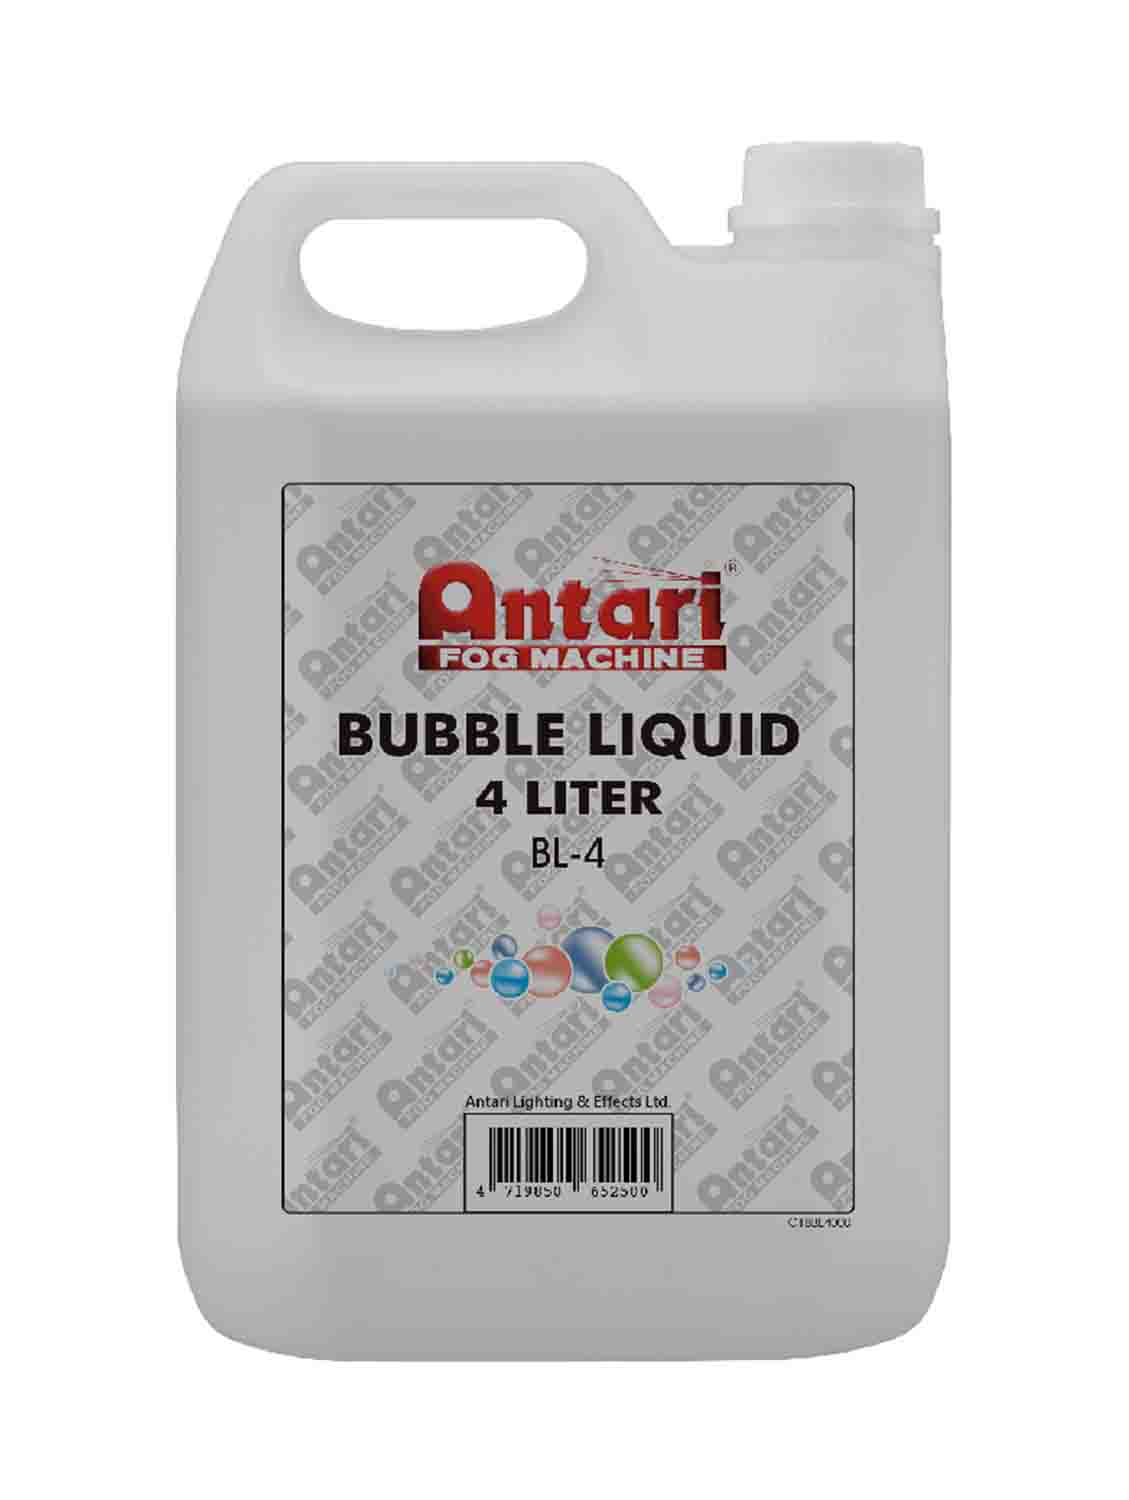 Antari BL-4 Bottle of Bubble Fluid - 4 Liter - Hollywood DJ